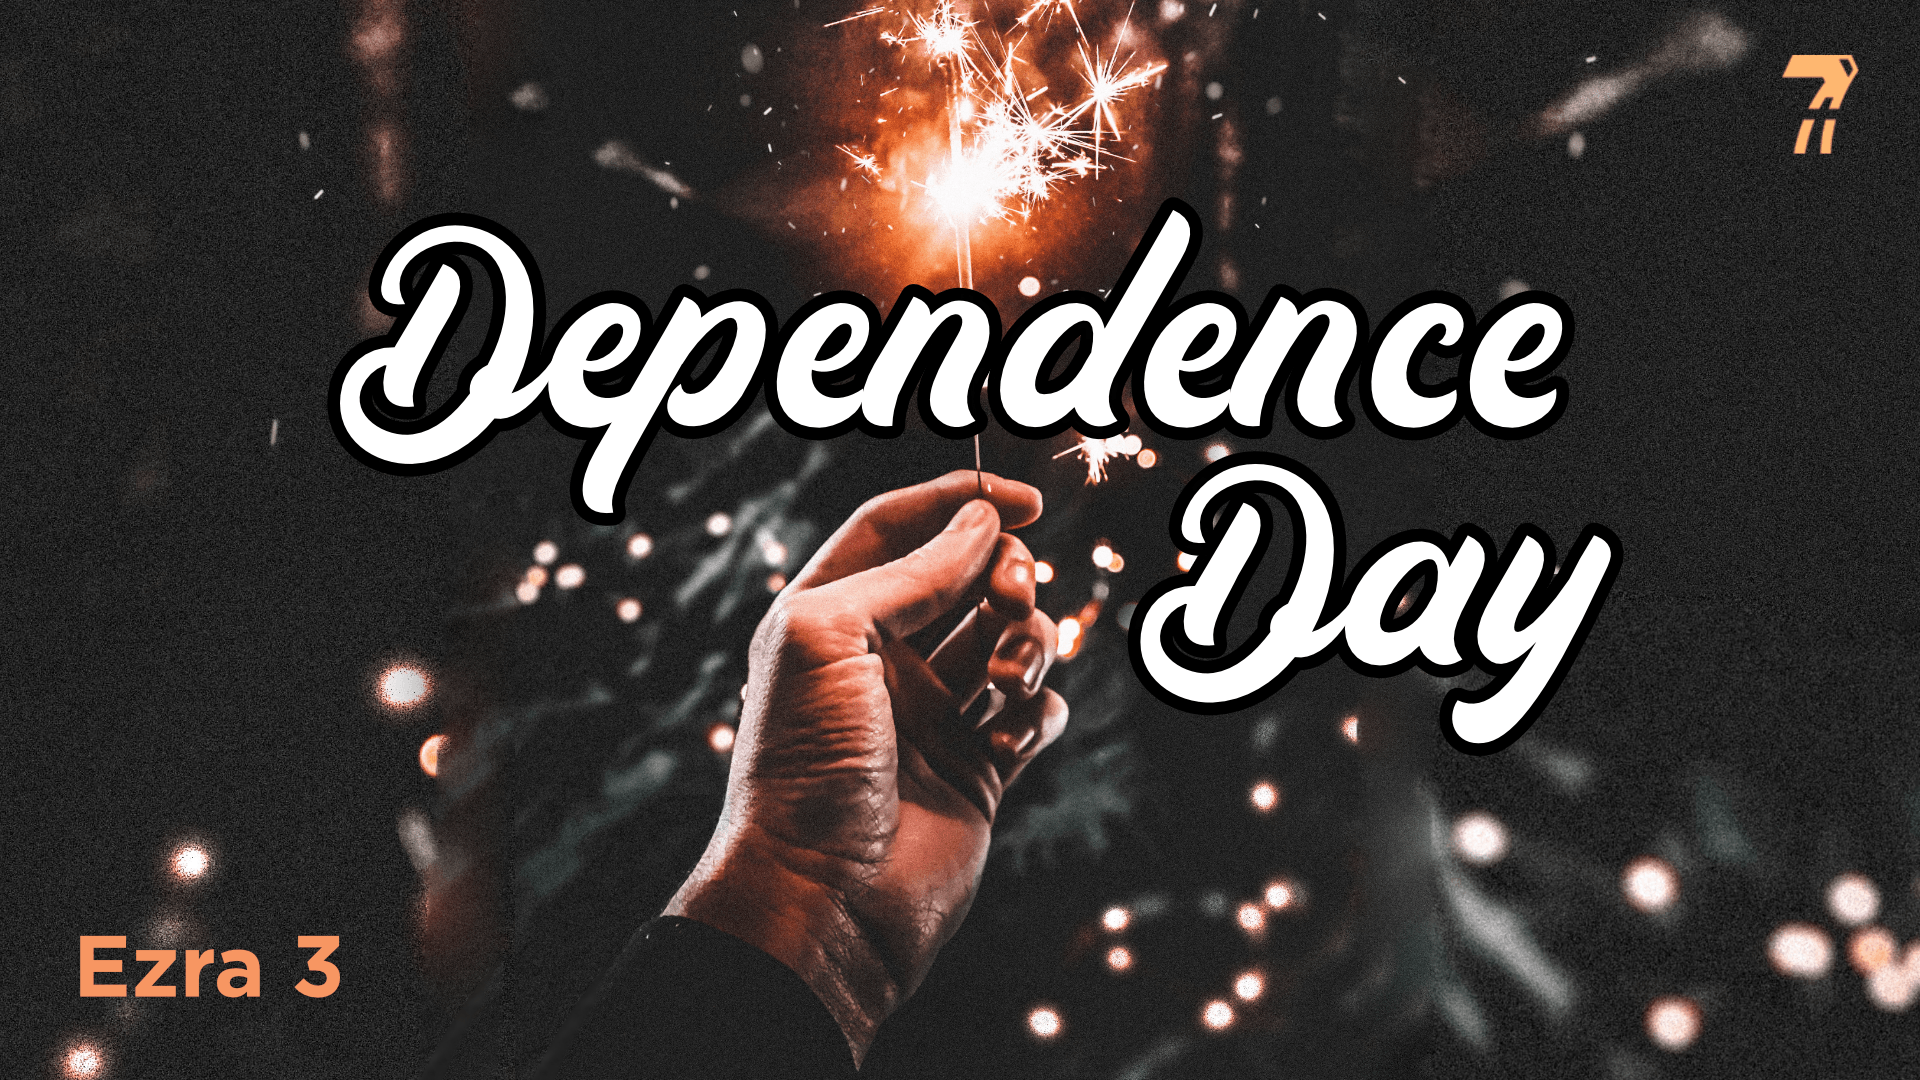 Ezra 3 – Dependence Day